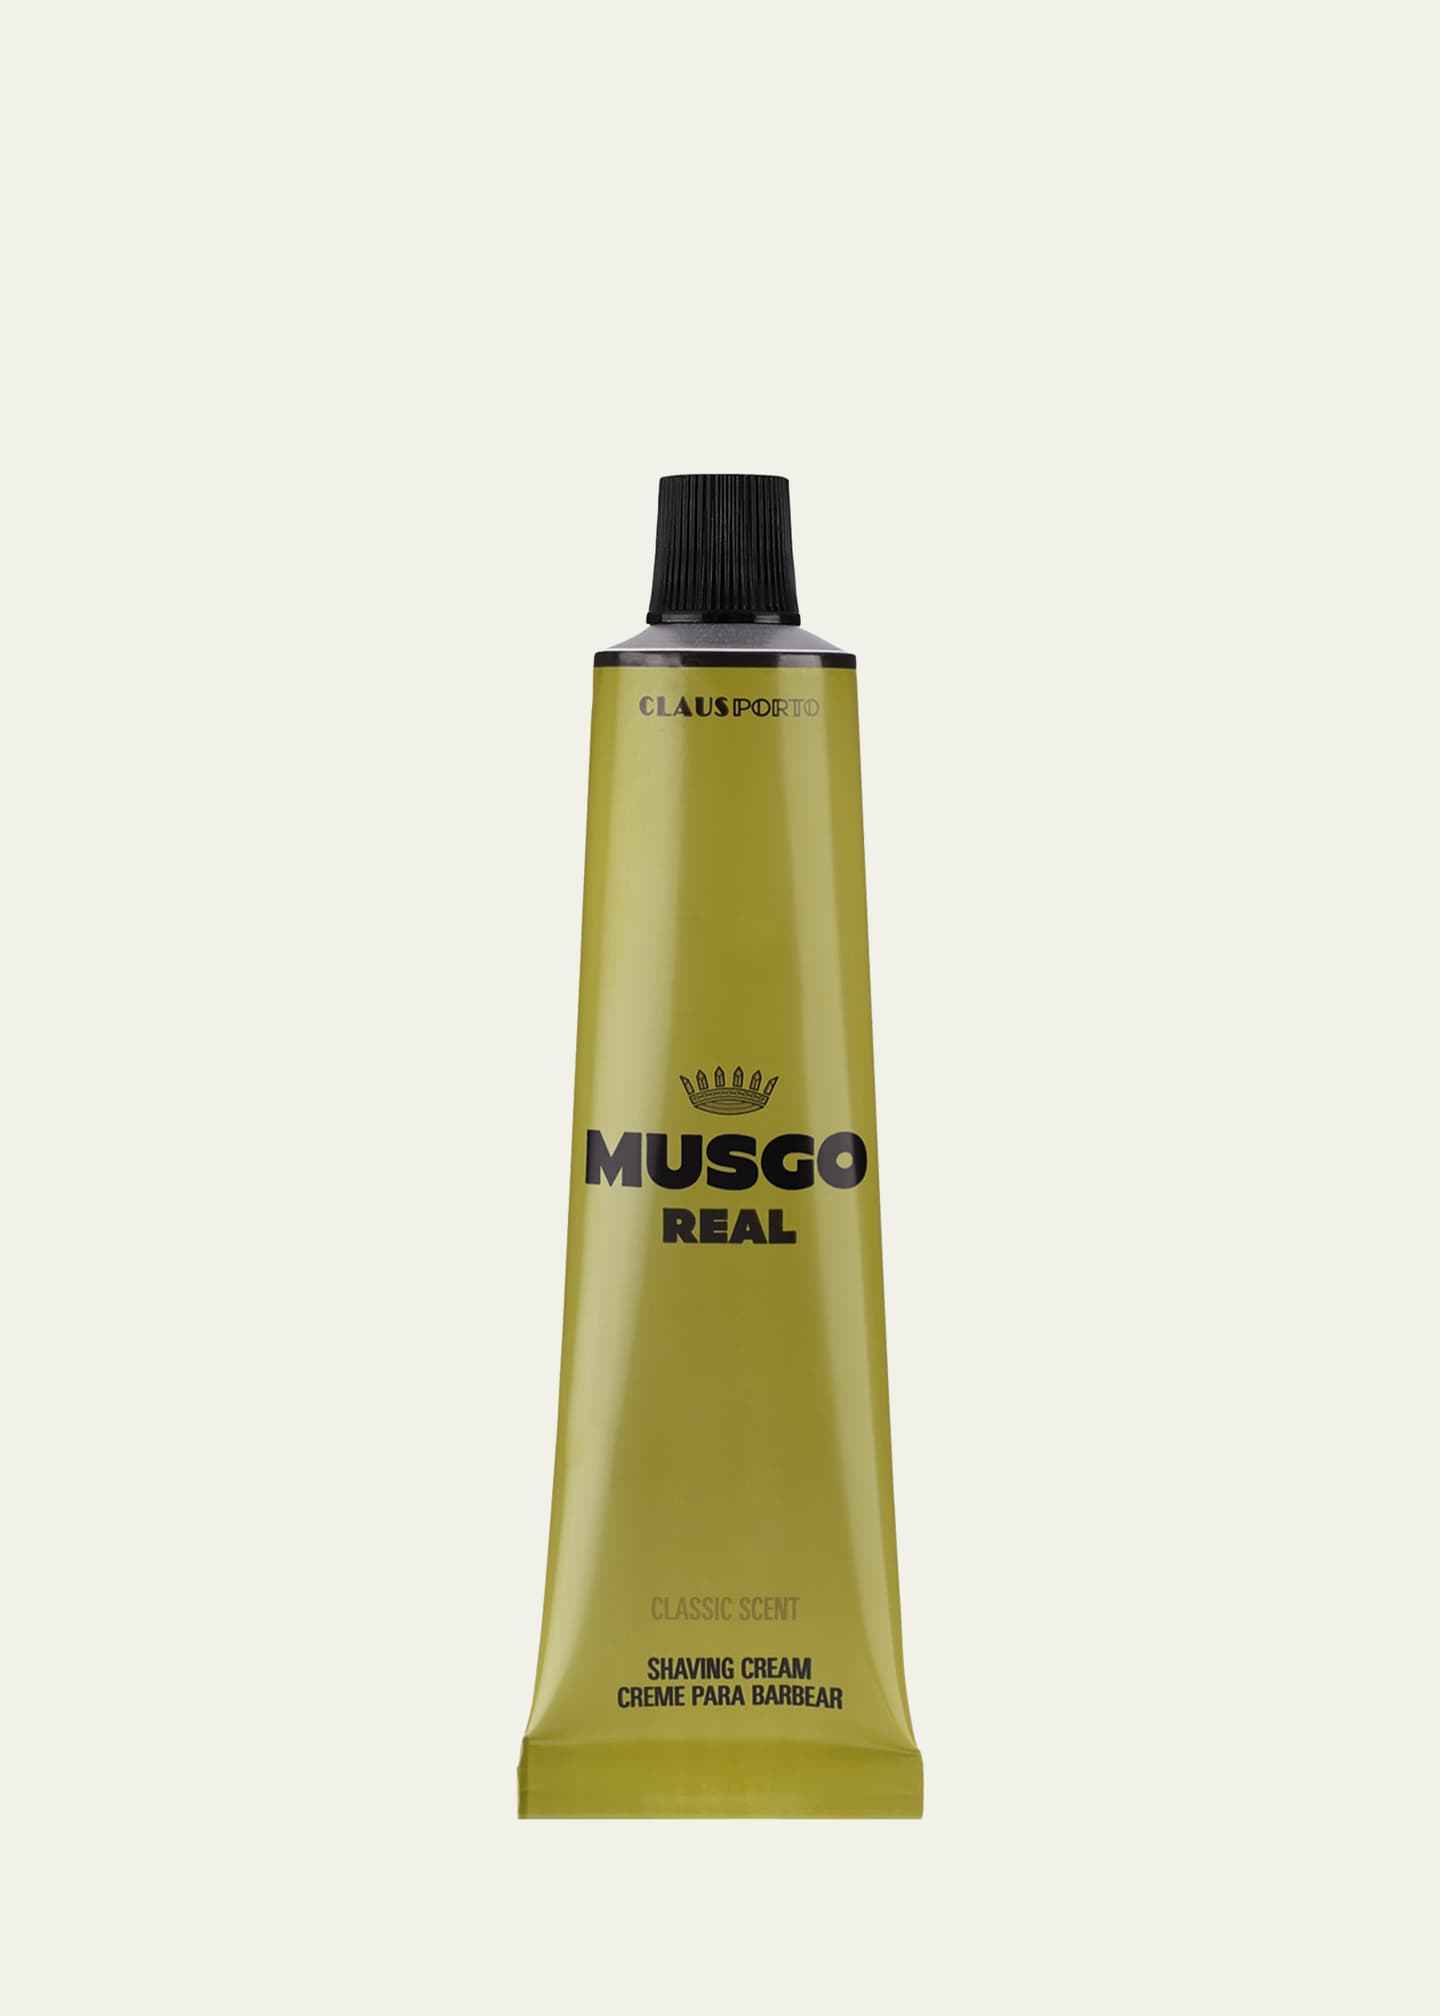 Musgo Real Classic Scent Shaving Cream, 3.4 oz./ 100 mL - Bergdorf Goodman